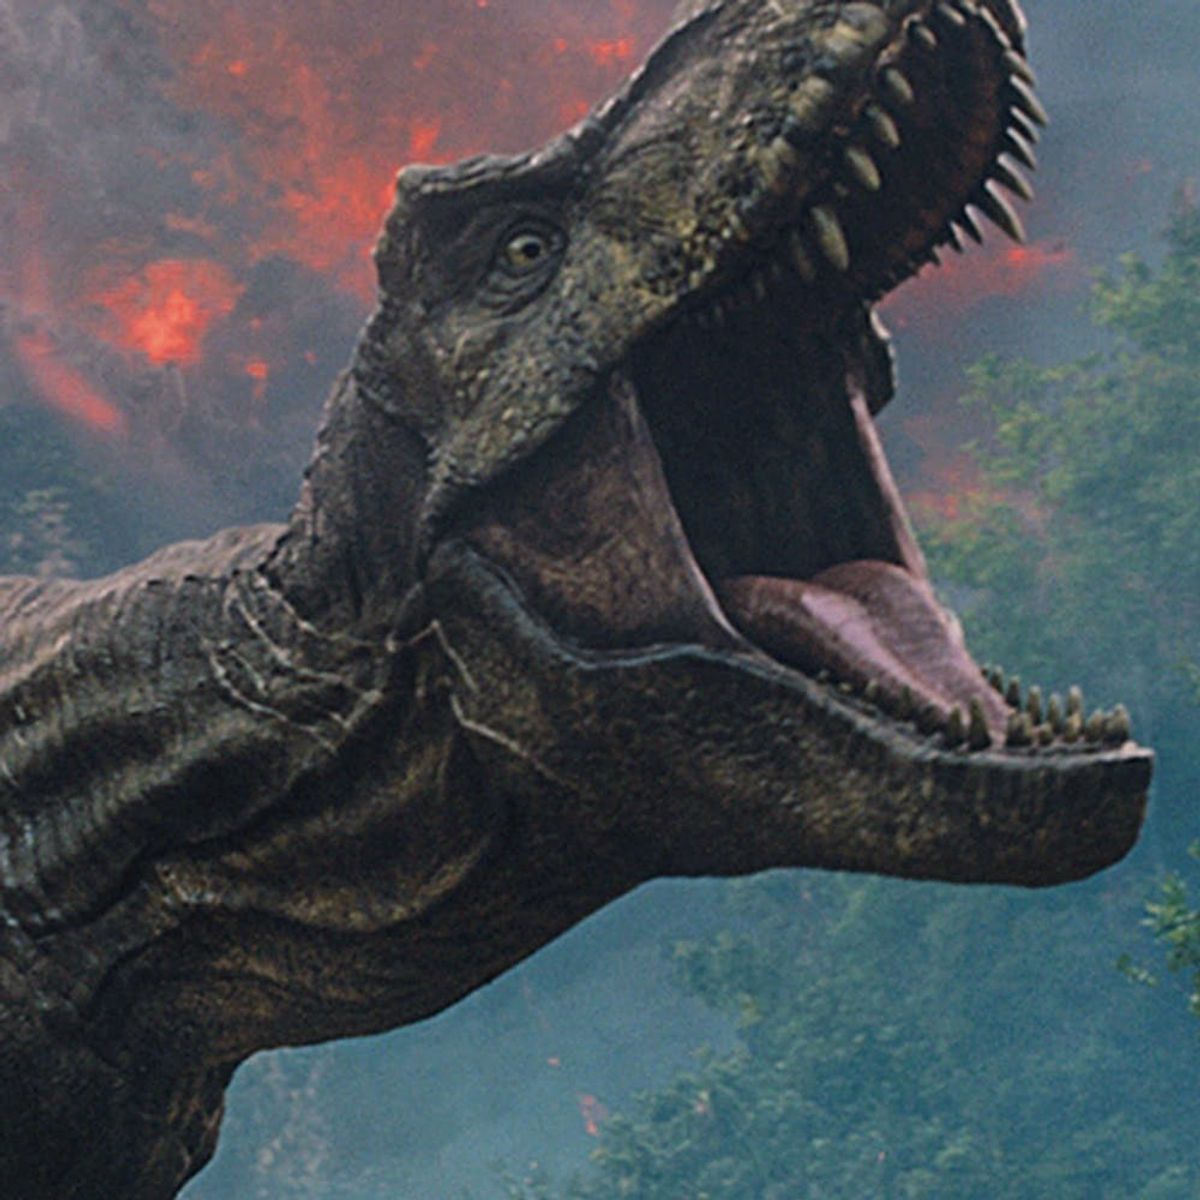 “Jurassic World 3” Already Has a Release Date!